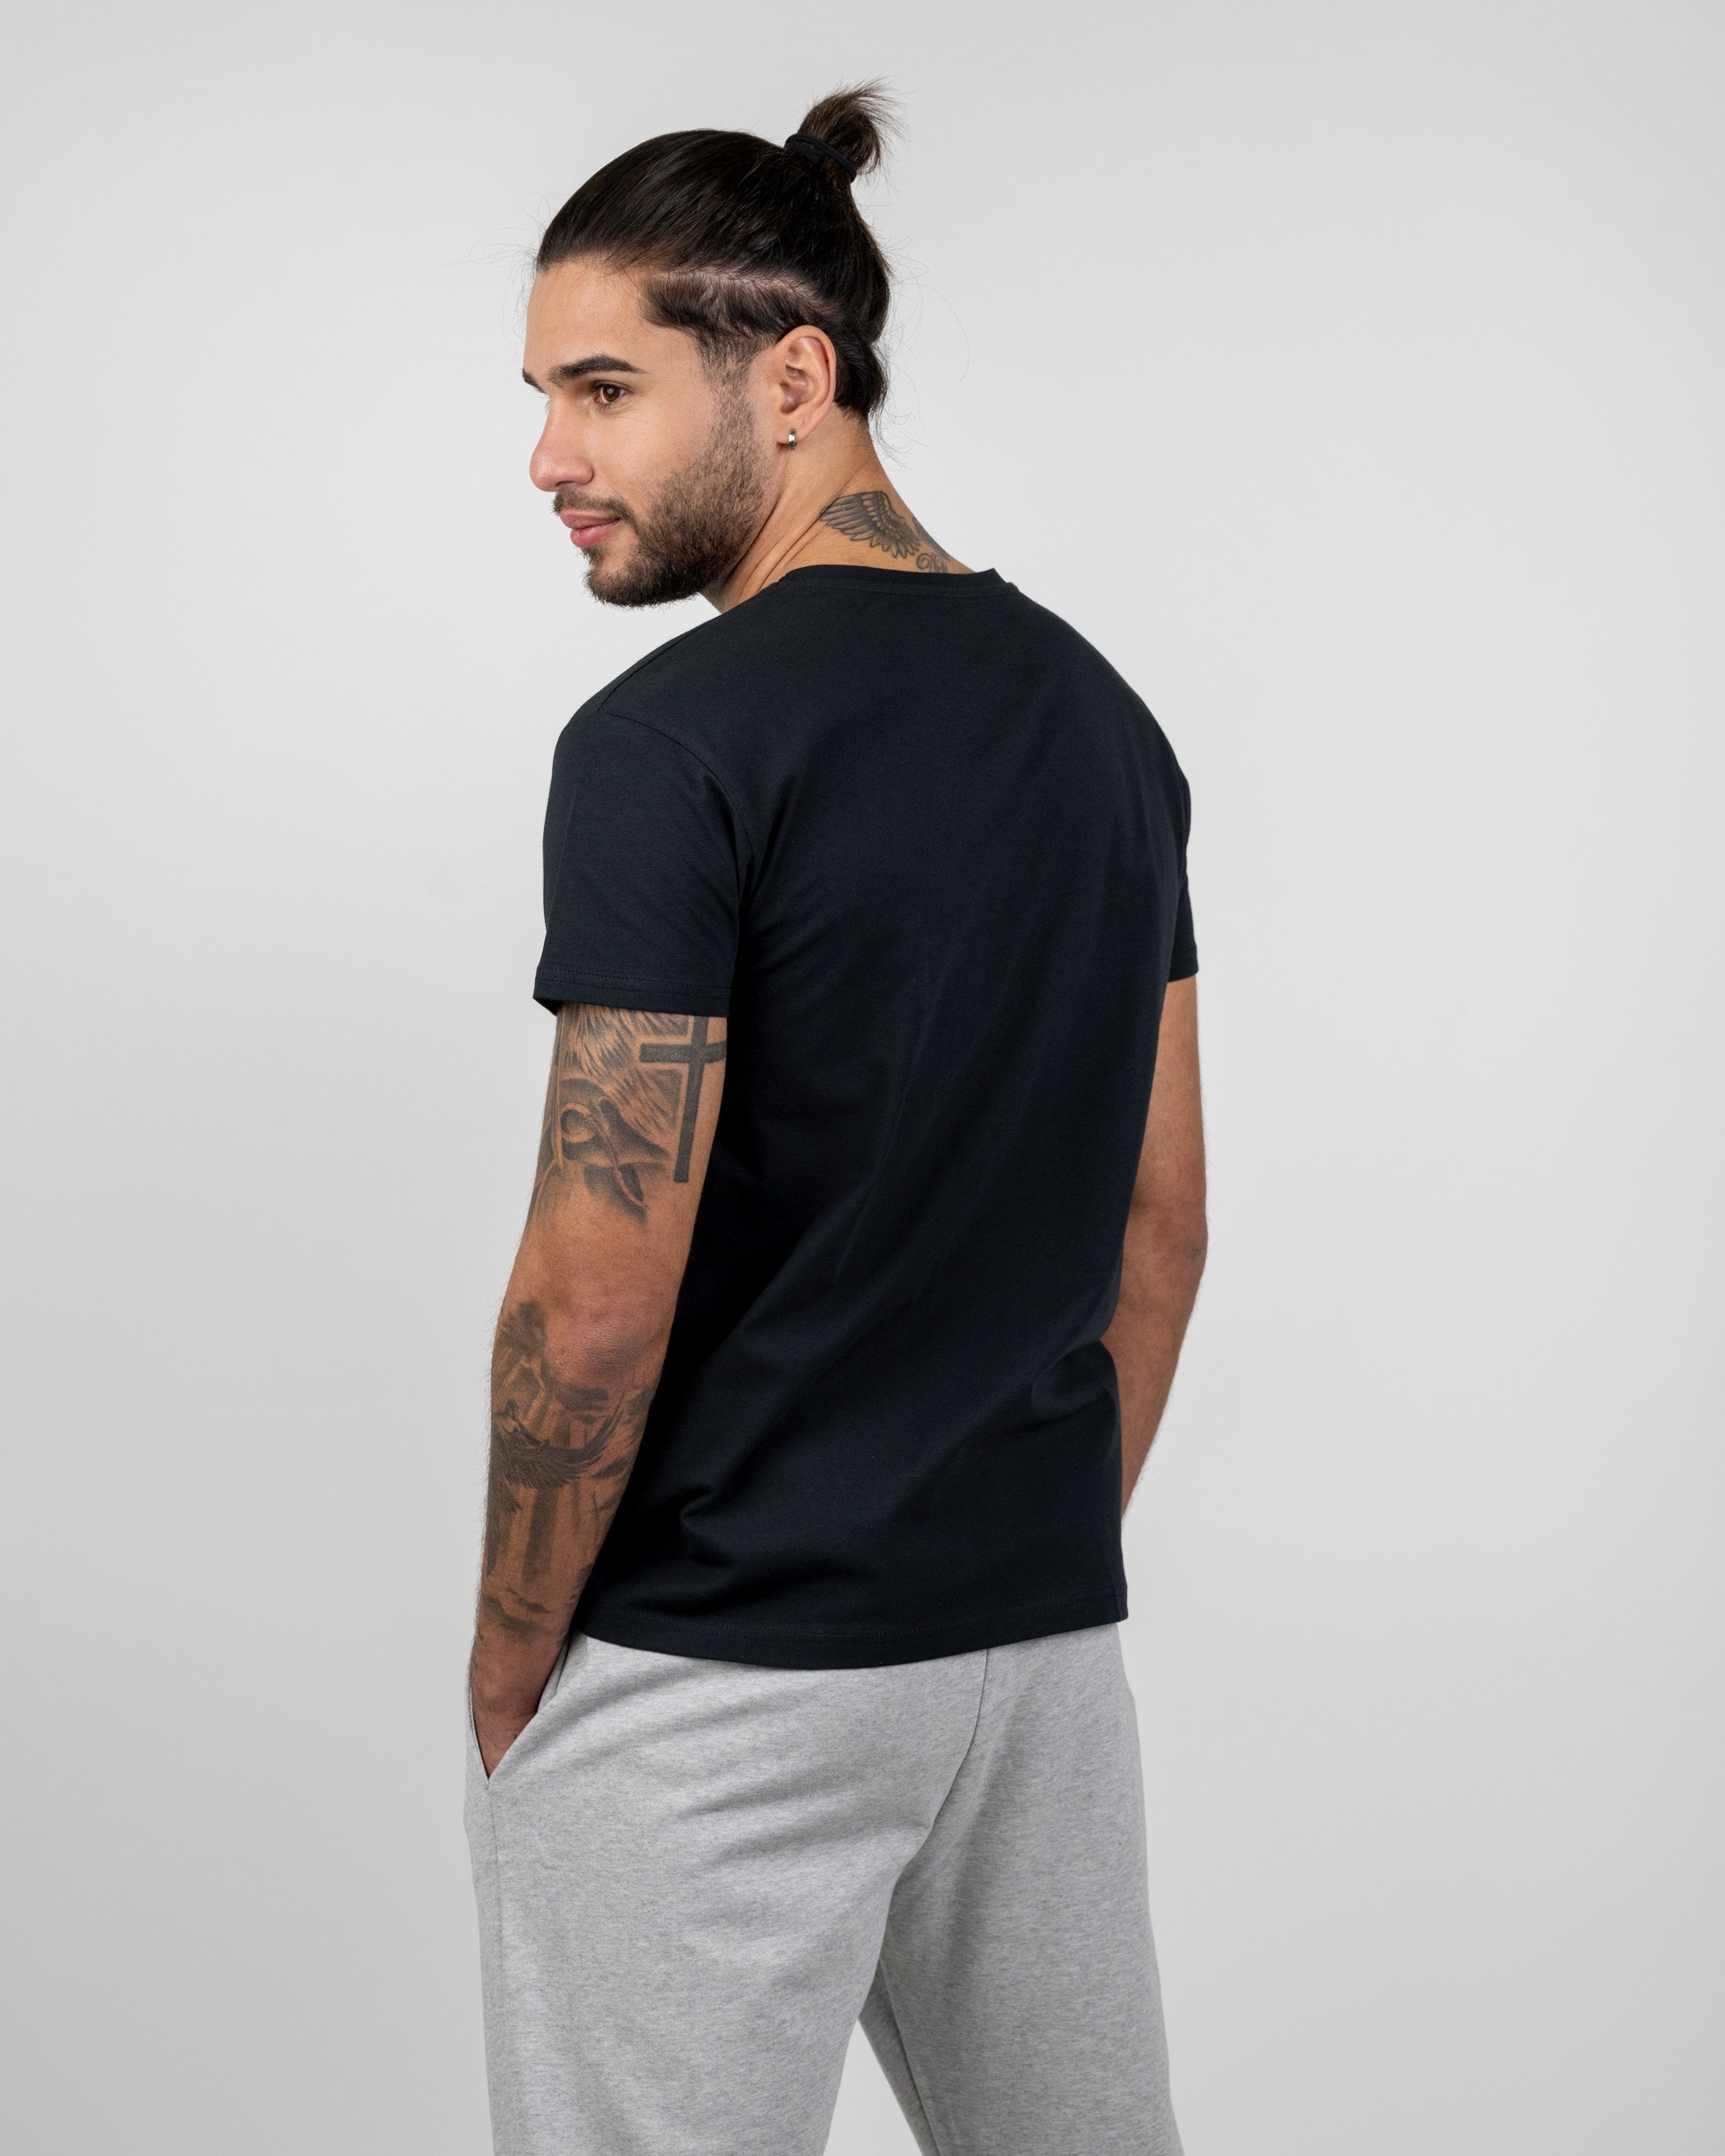 Men's organic cotton T-shirt Treeshirt Black